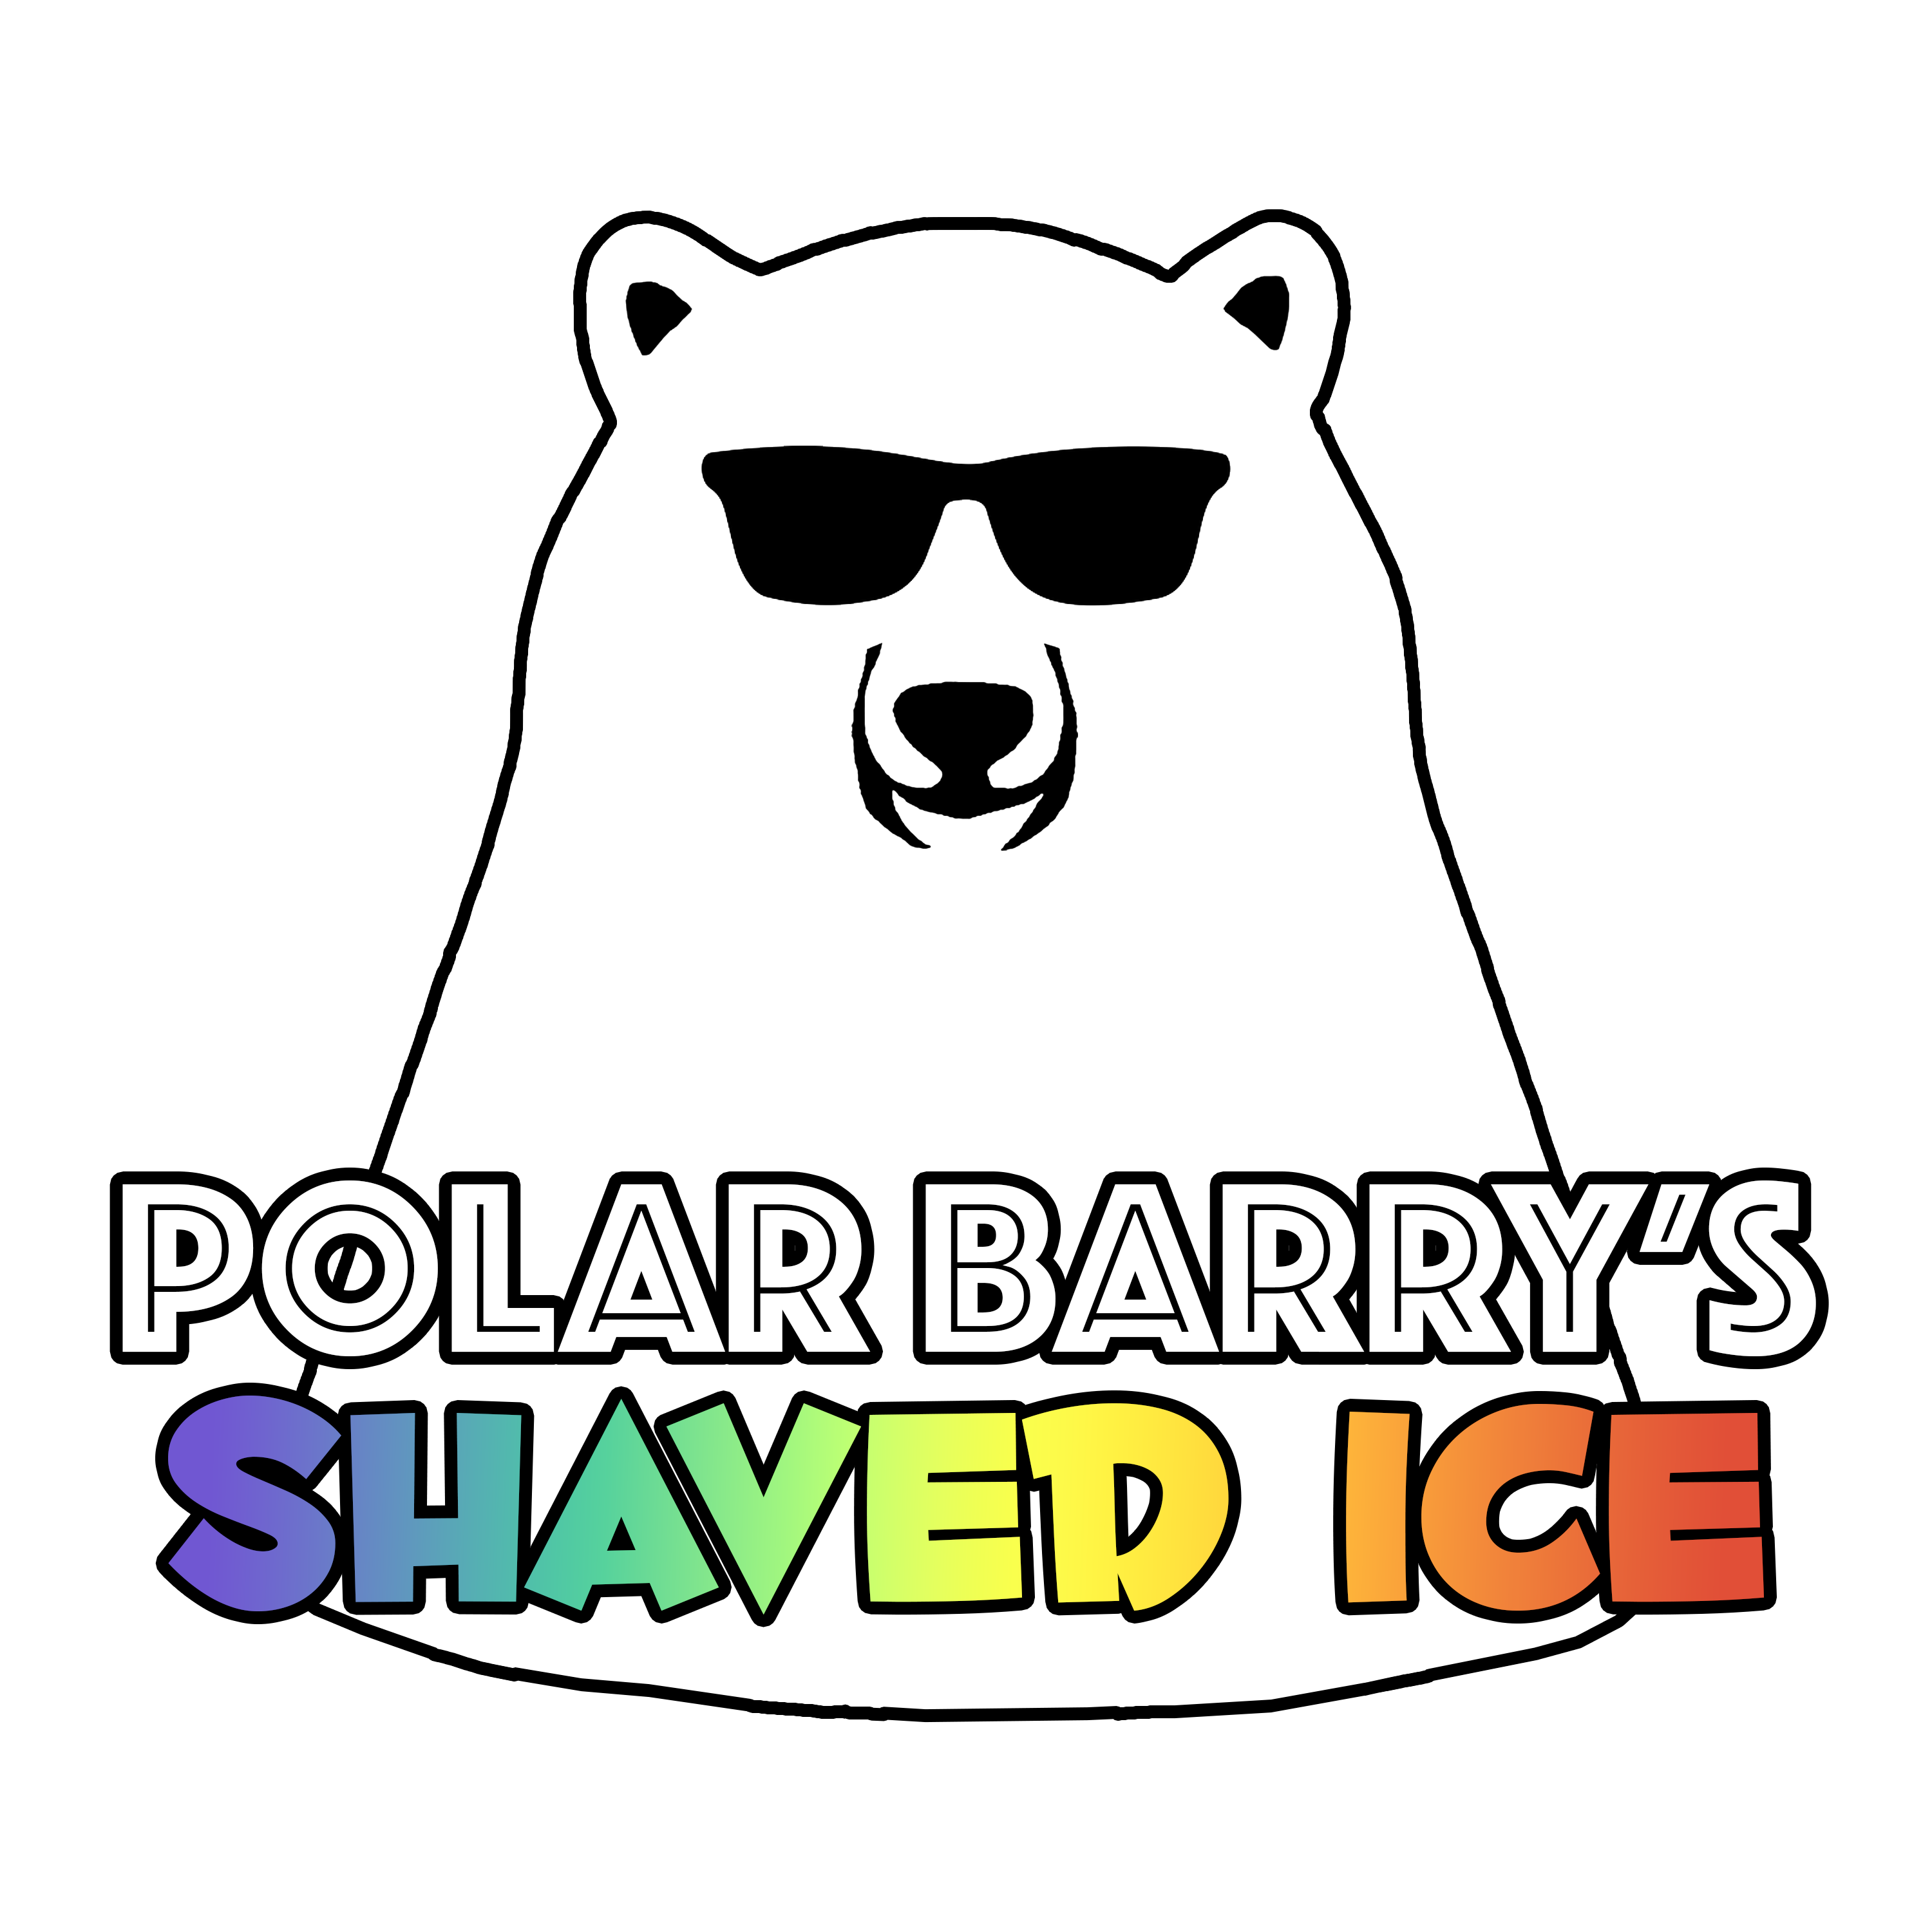 Polar Barry’s Shaved Ice